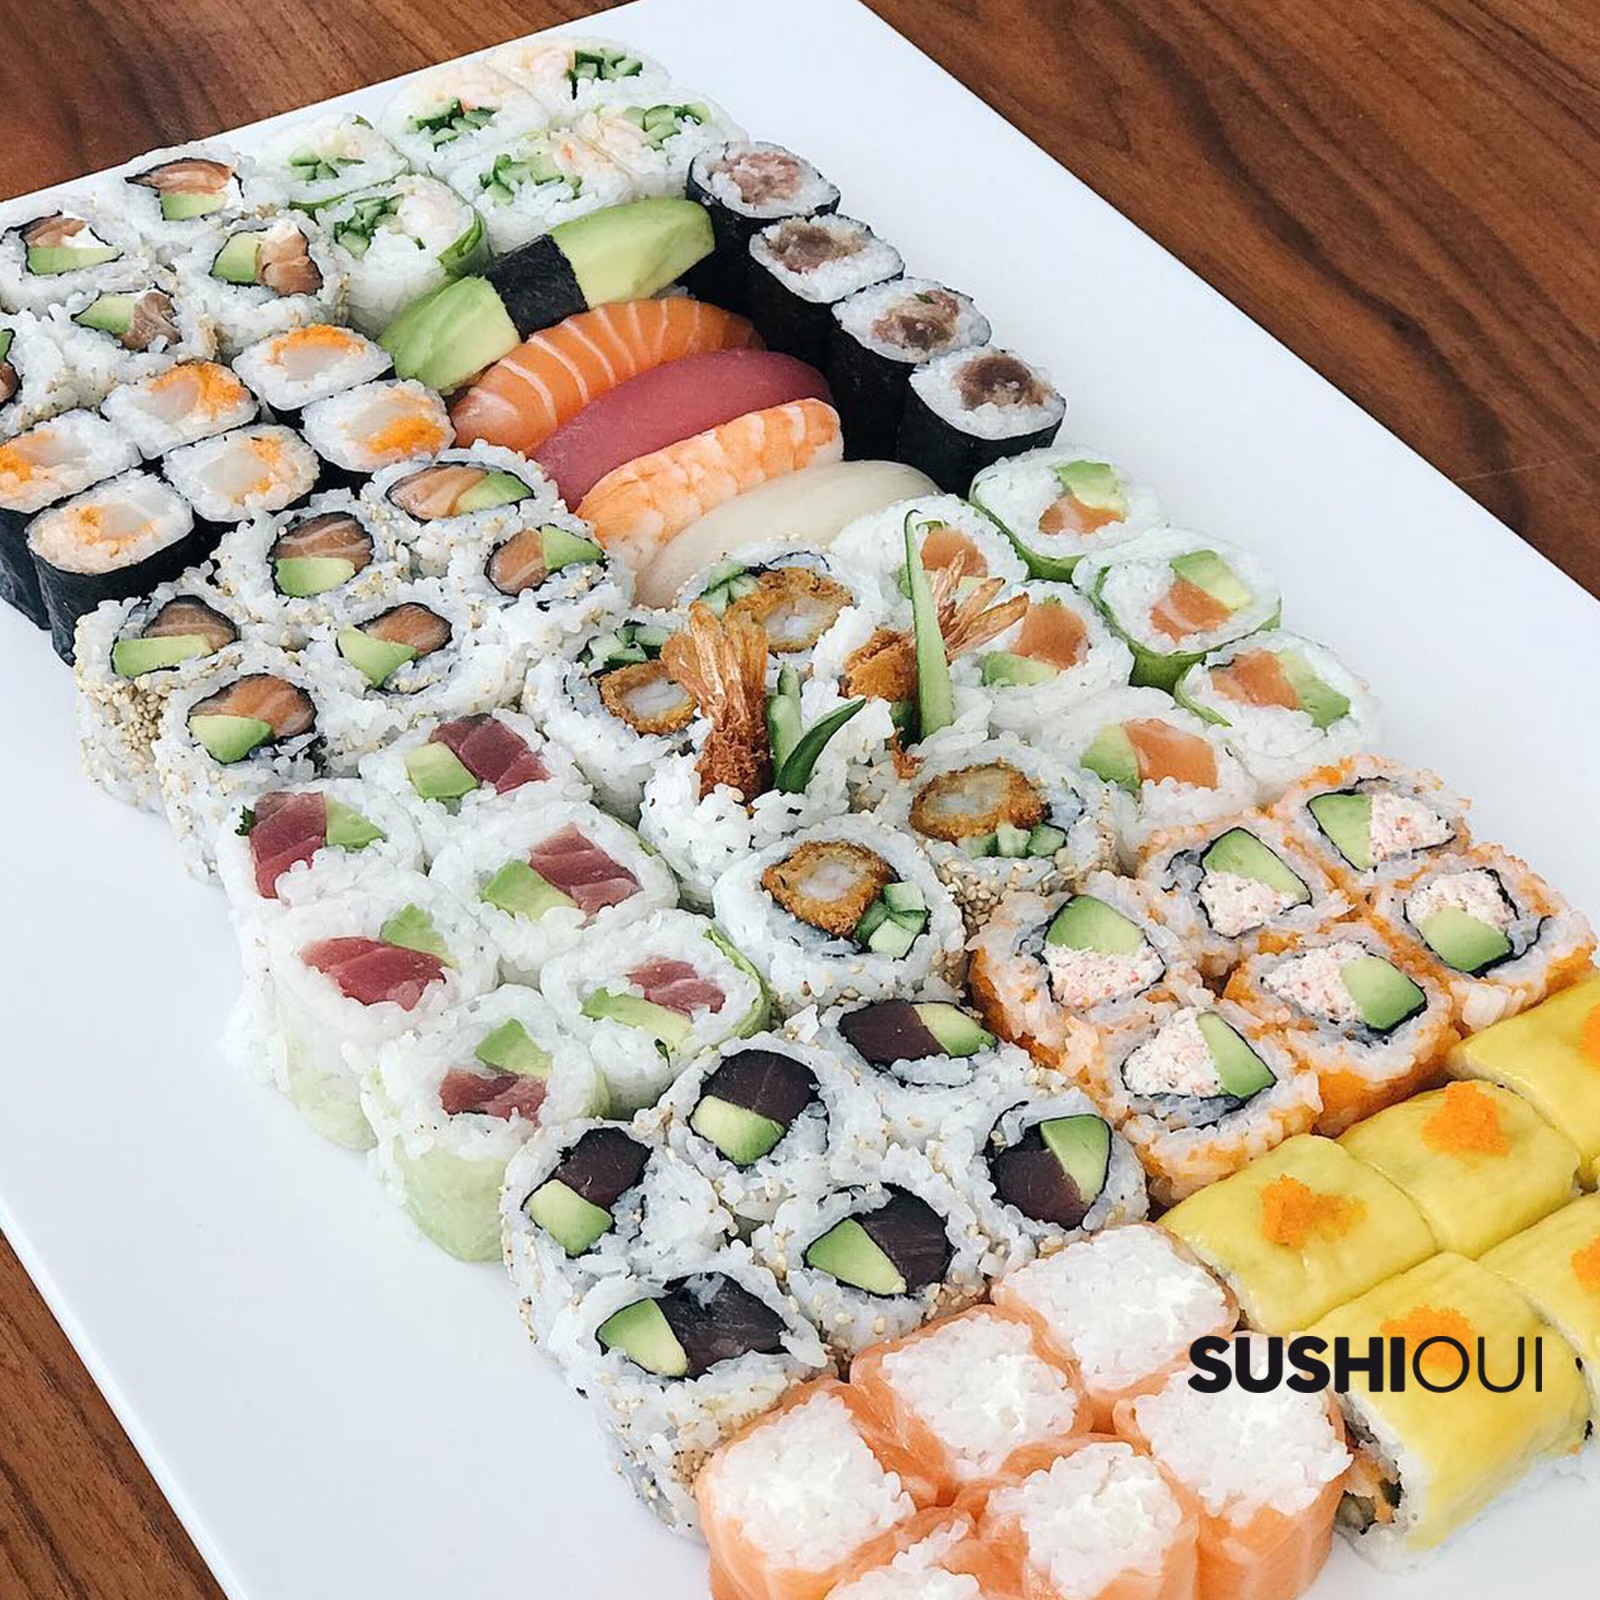 Sushi & Maki Sushi Oui available to rent / verhuur / location at 50.8 Studio • Belgïe, Belgique, Belgium, Catering, Huur, Location, Louer, Only in, Photo, Rent, Studio, Verhuur, Video